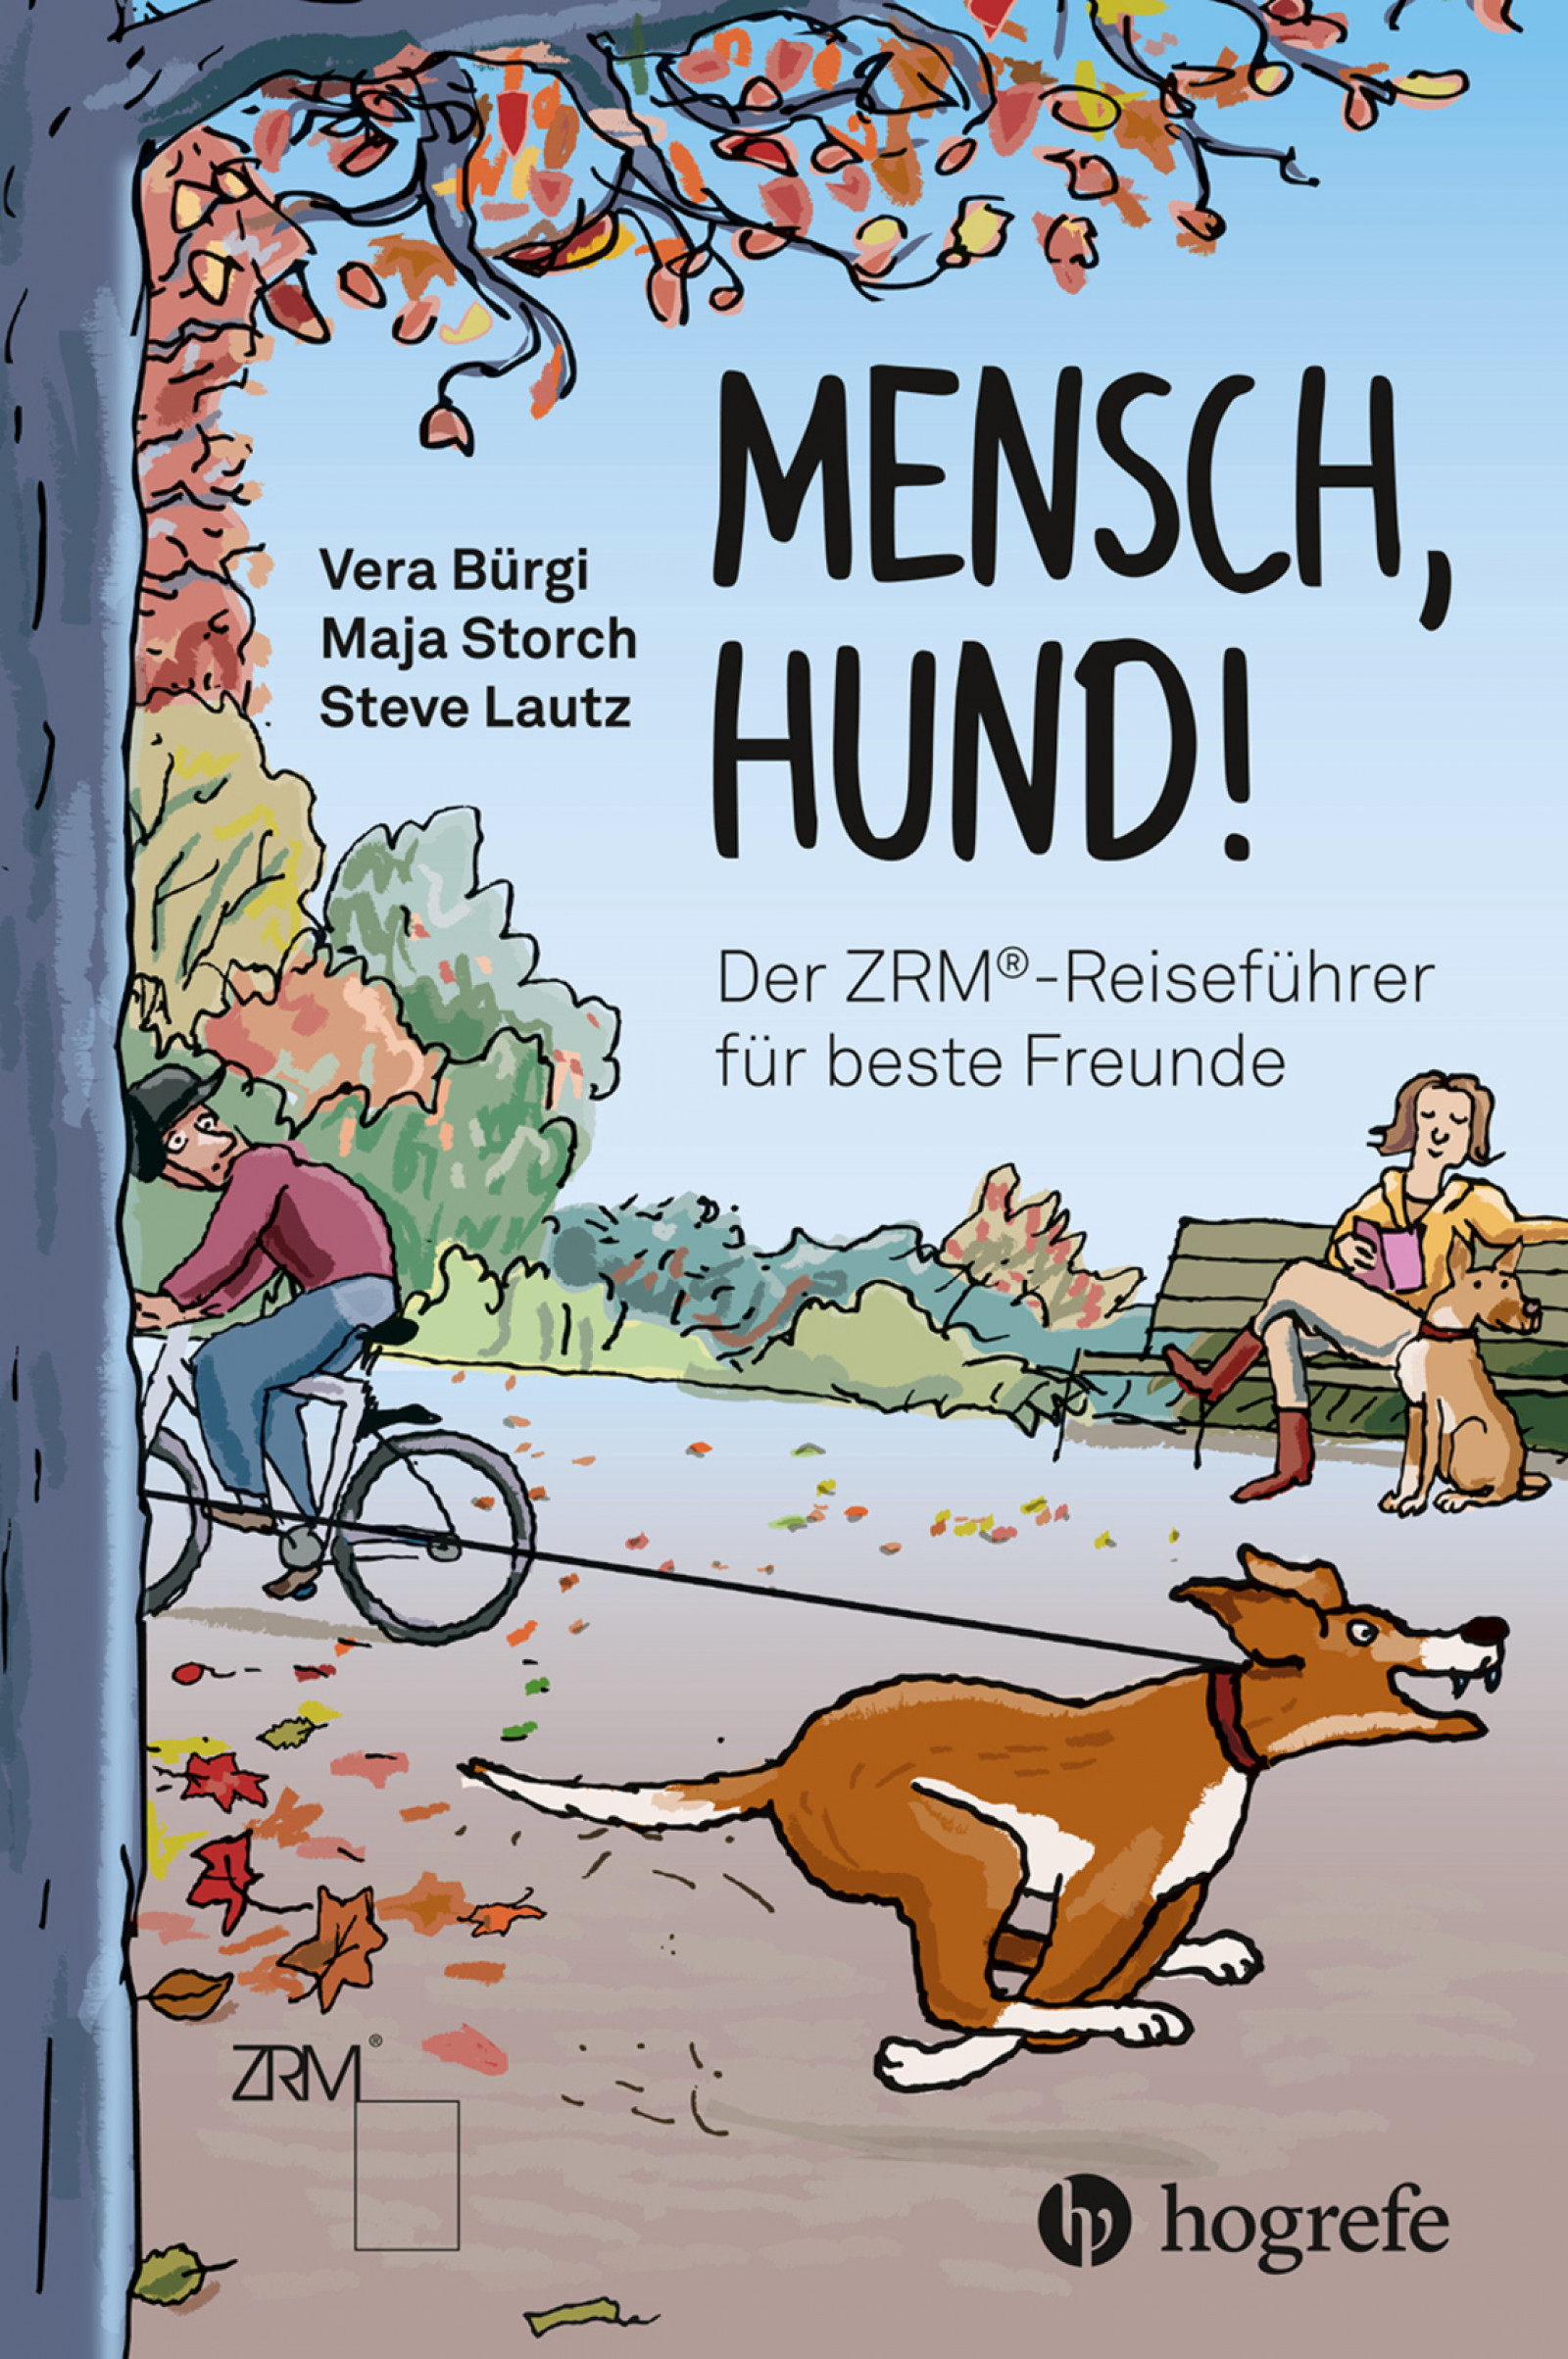 Eva Bürgi, Maja Storch, Steve Lautz: Mensch, Hund! (deutsch language, Hogrefe)